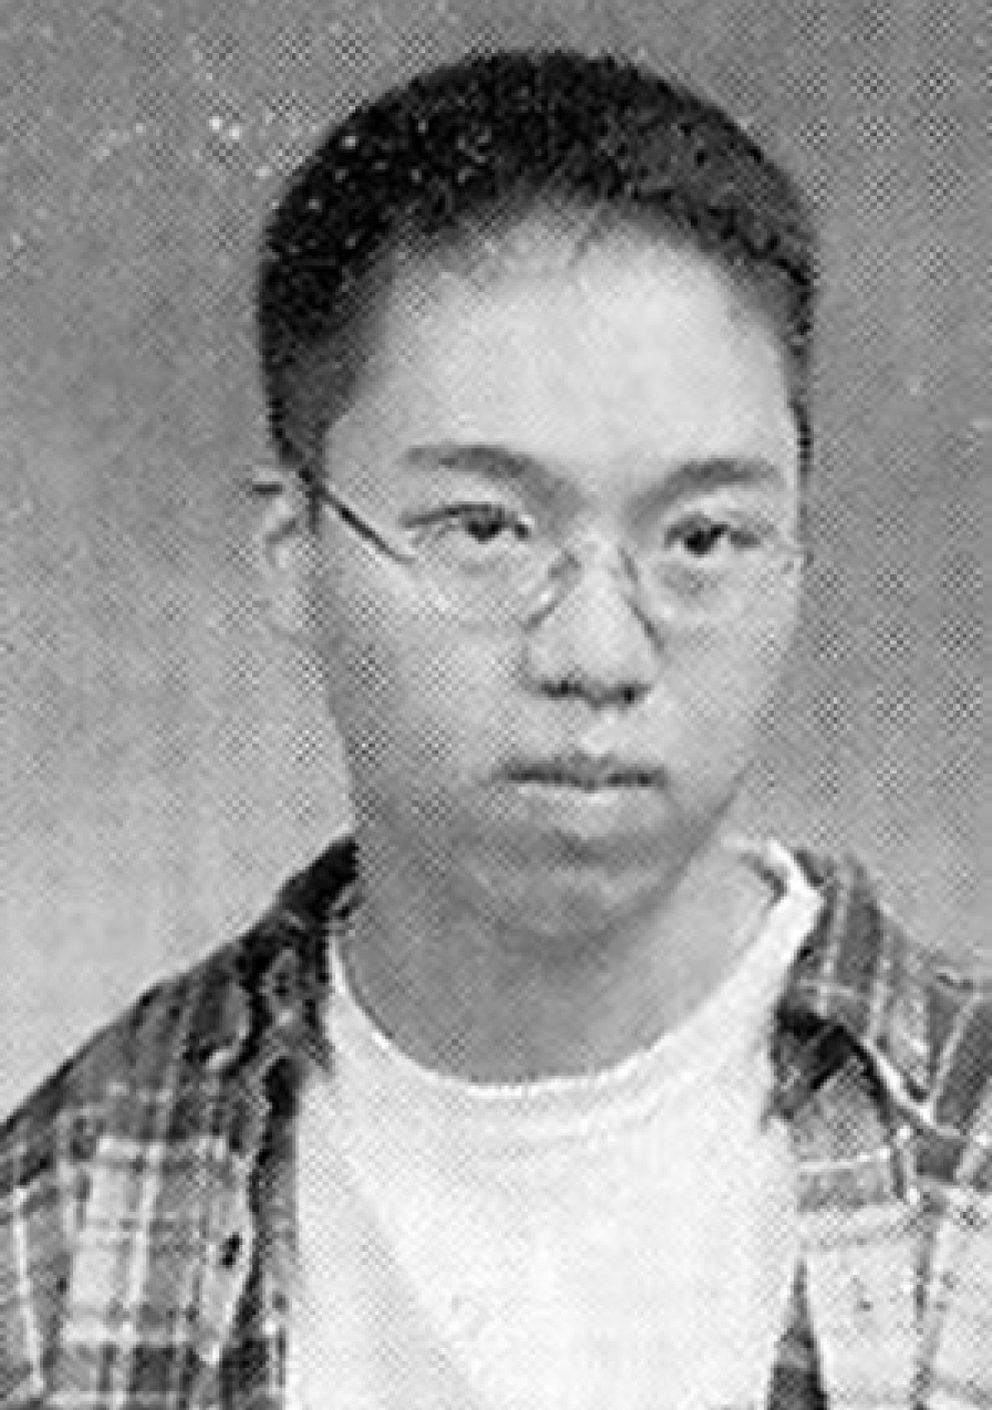 Foto: Cho Seung-Hui, un joven solitario autor de perturbadores relatos